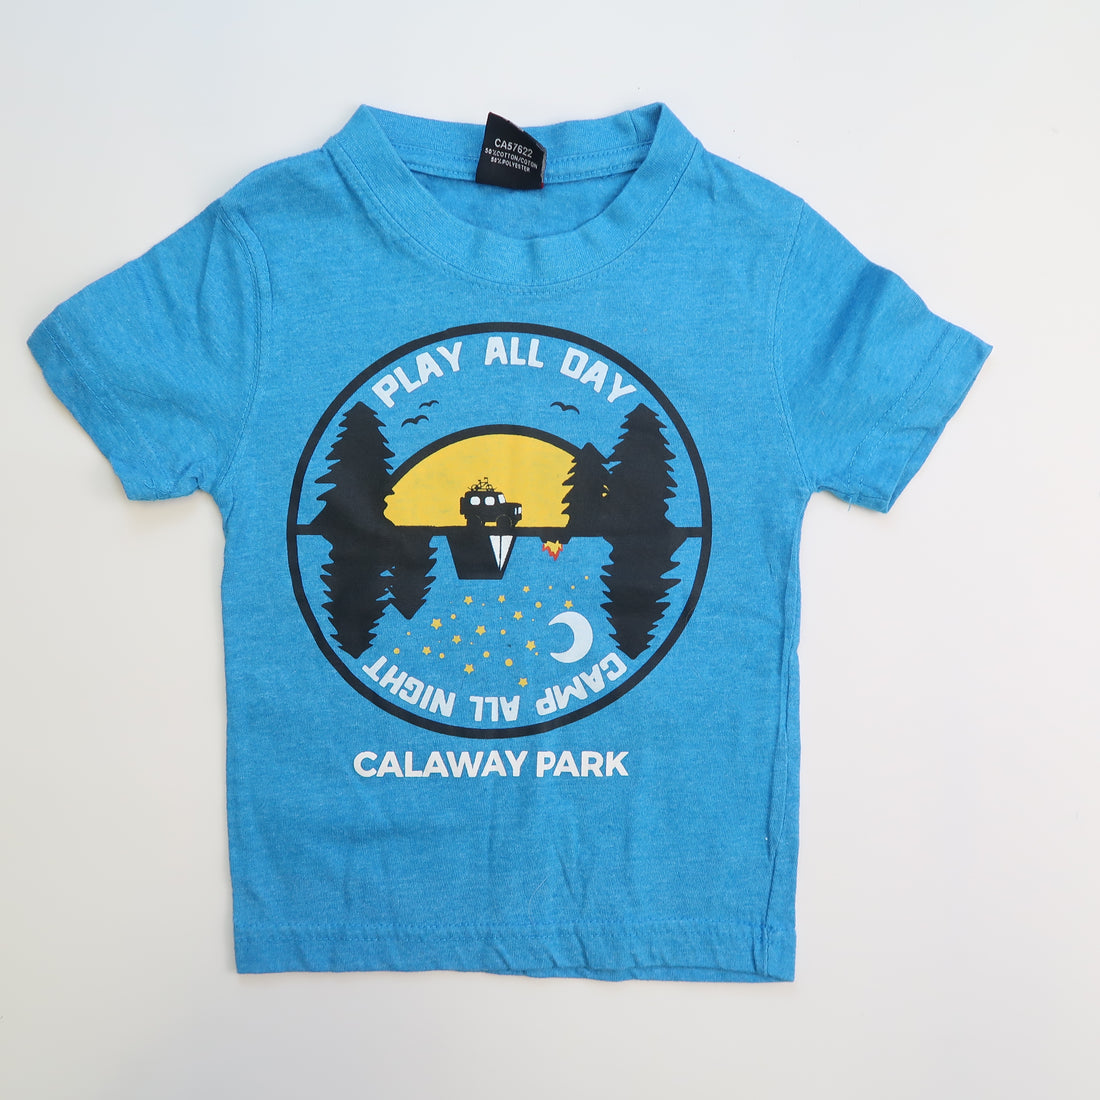 Calaway Park - T-Shirt (2T)